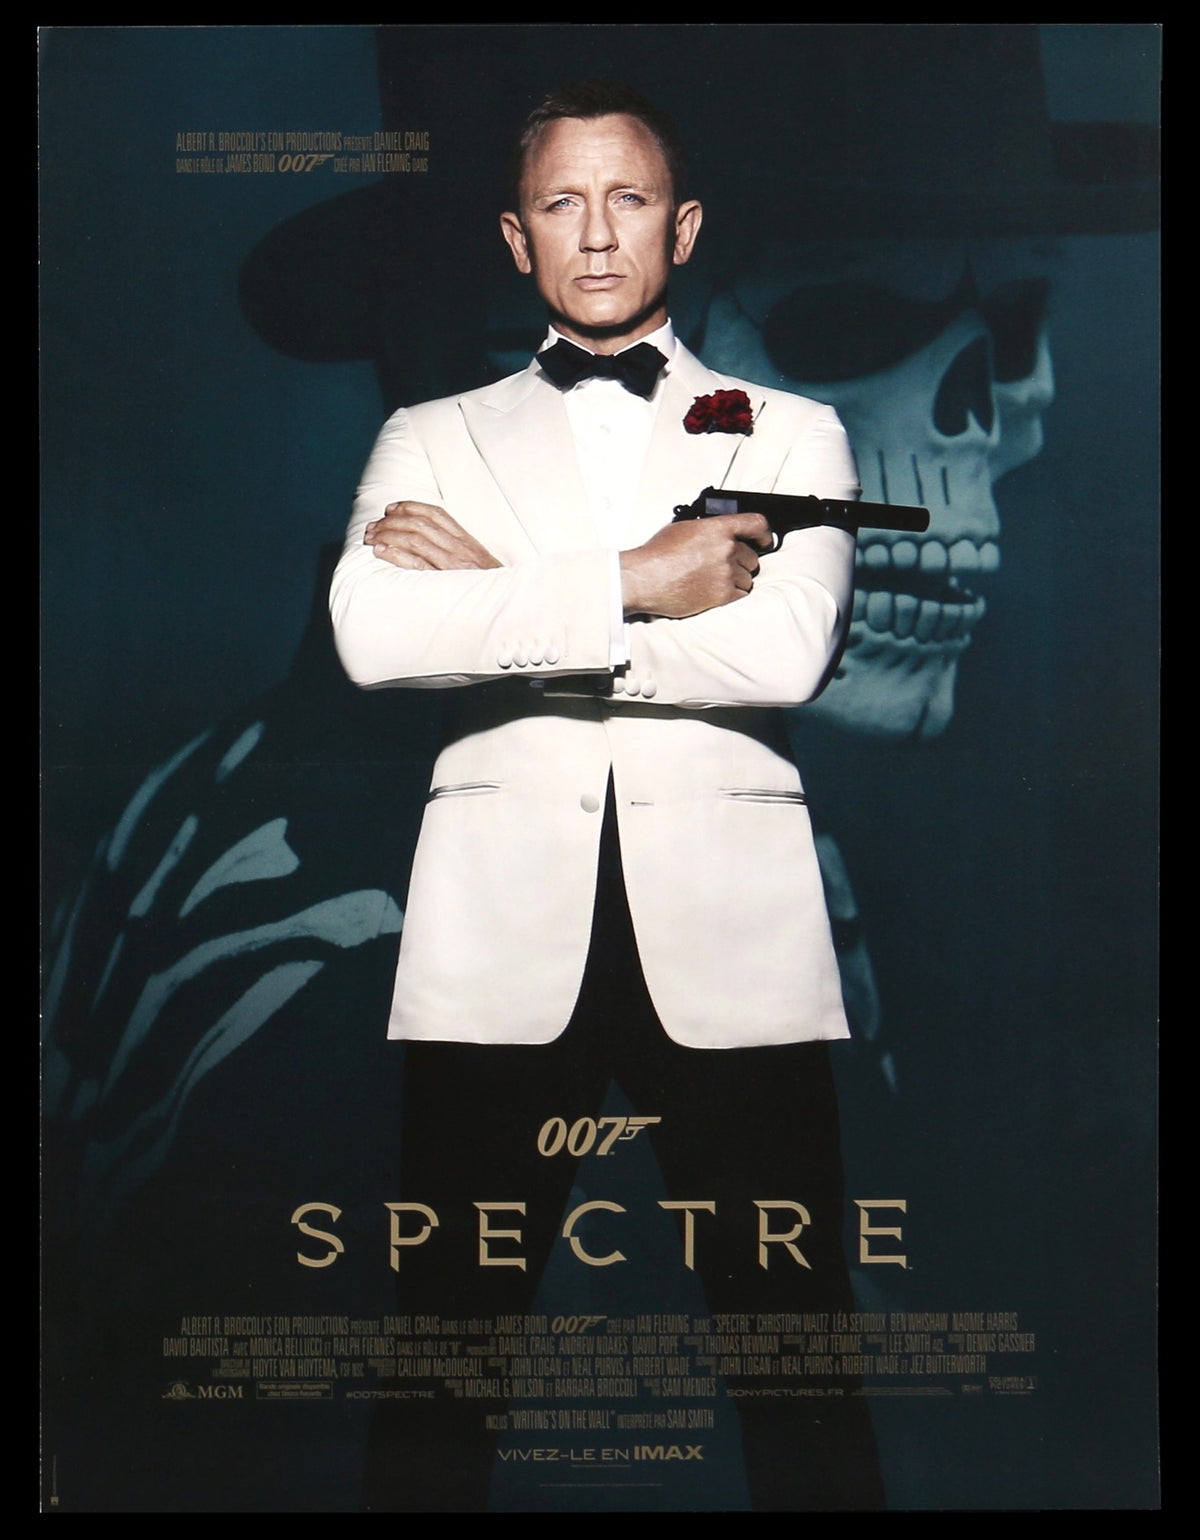 Spectre (2015) original movie poster for sale at Original Film Art